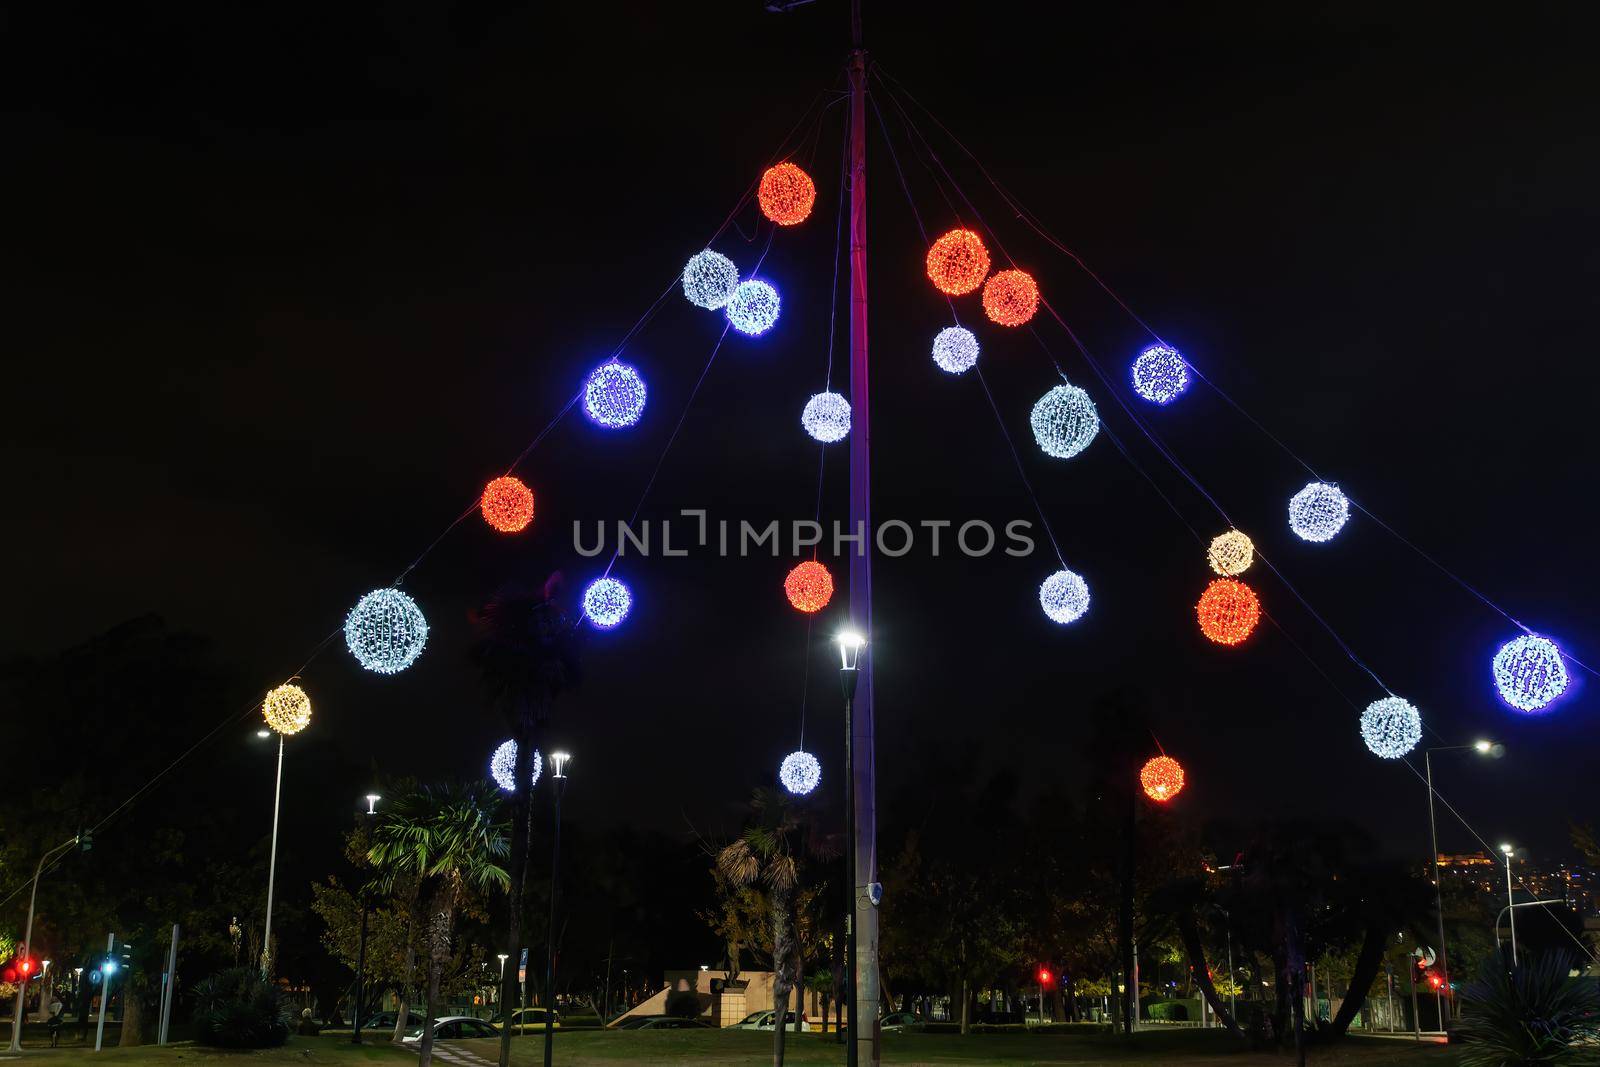 Festive instalments of illuminated hanging sphere ornaments at Thessaloniki, Greece.